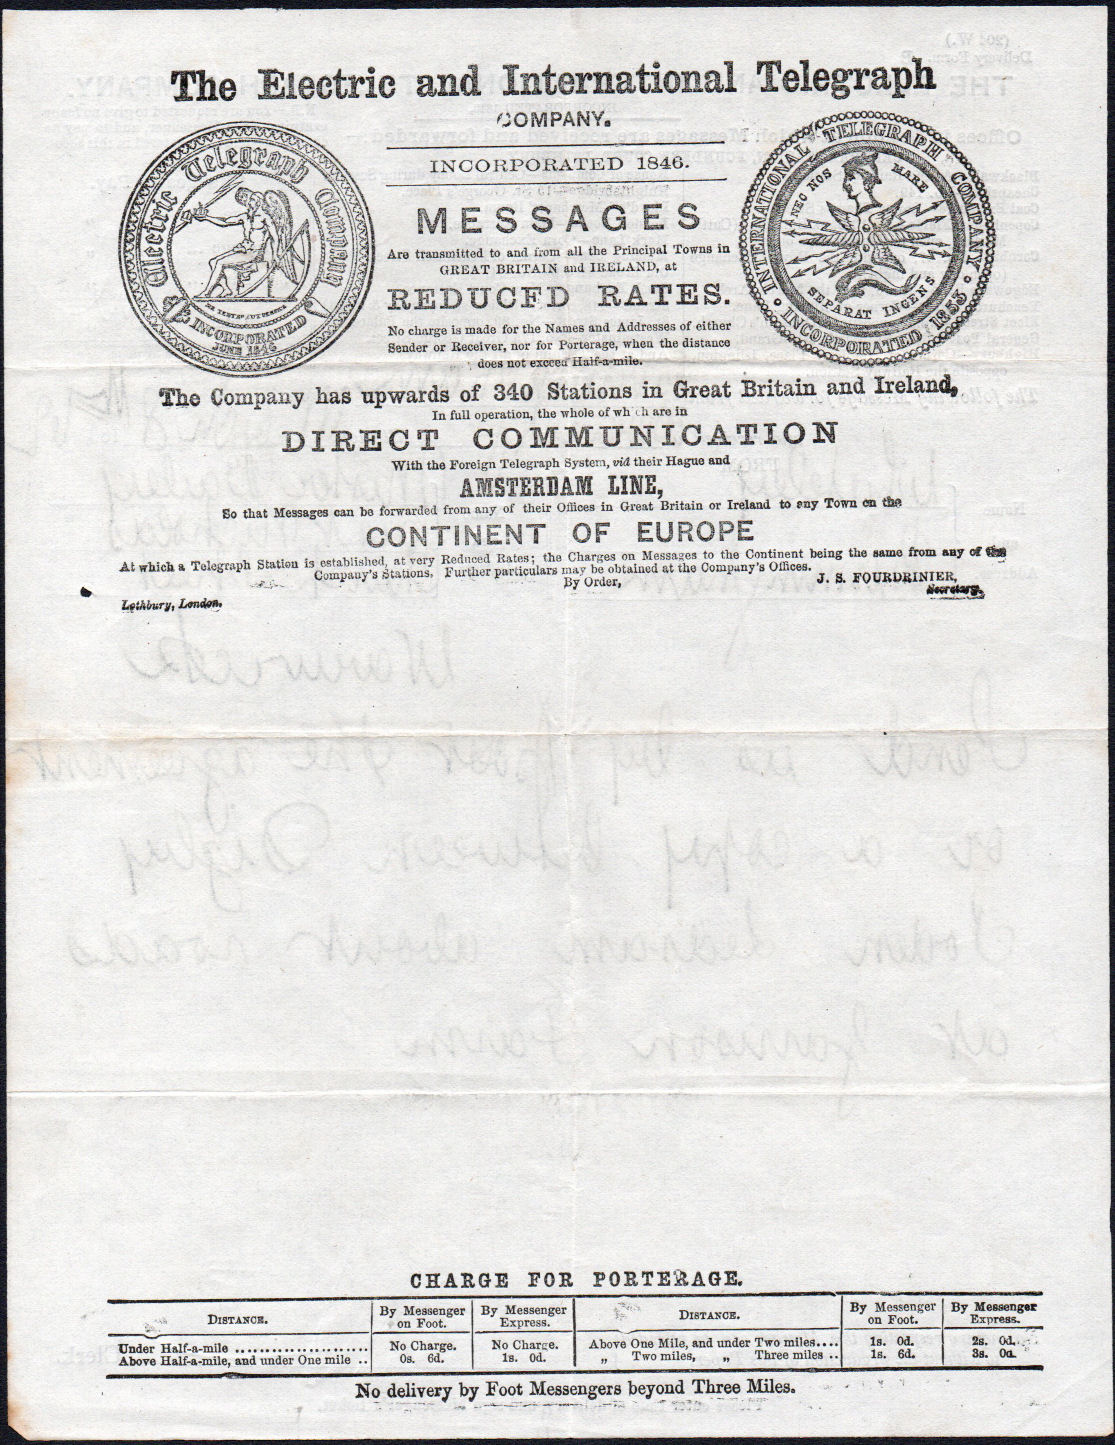 Electric Telegraph Company Form B - back.